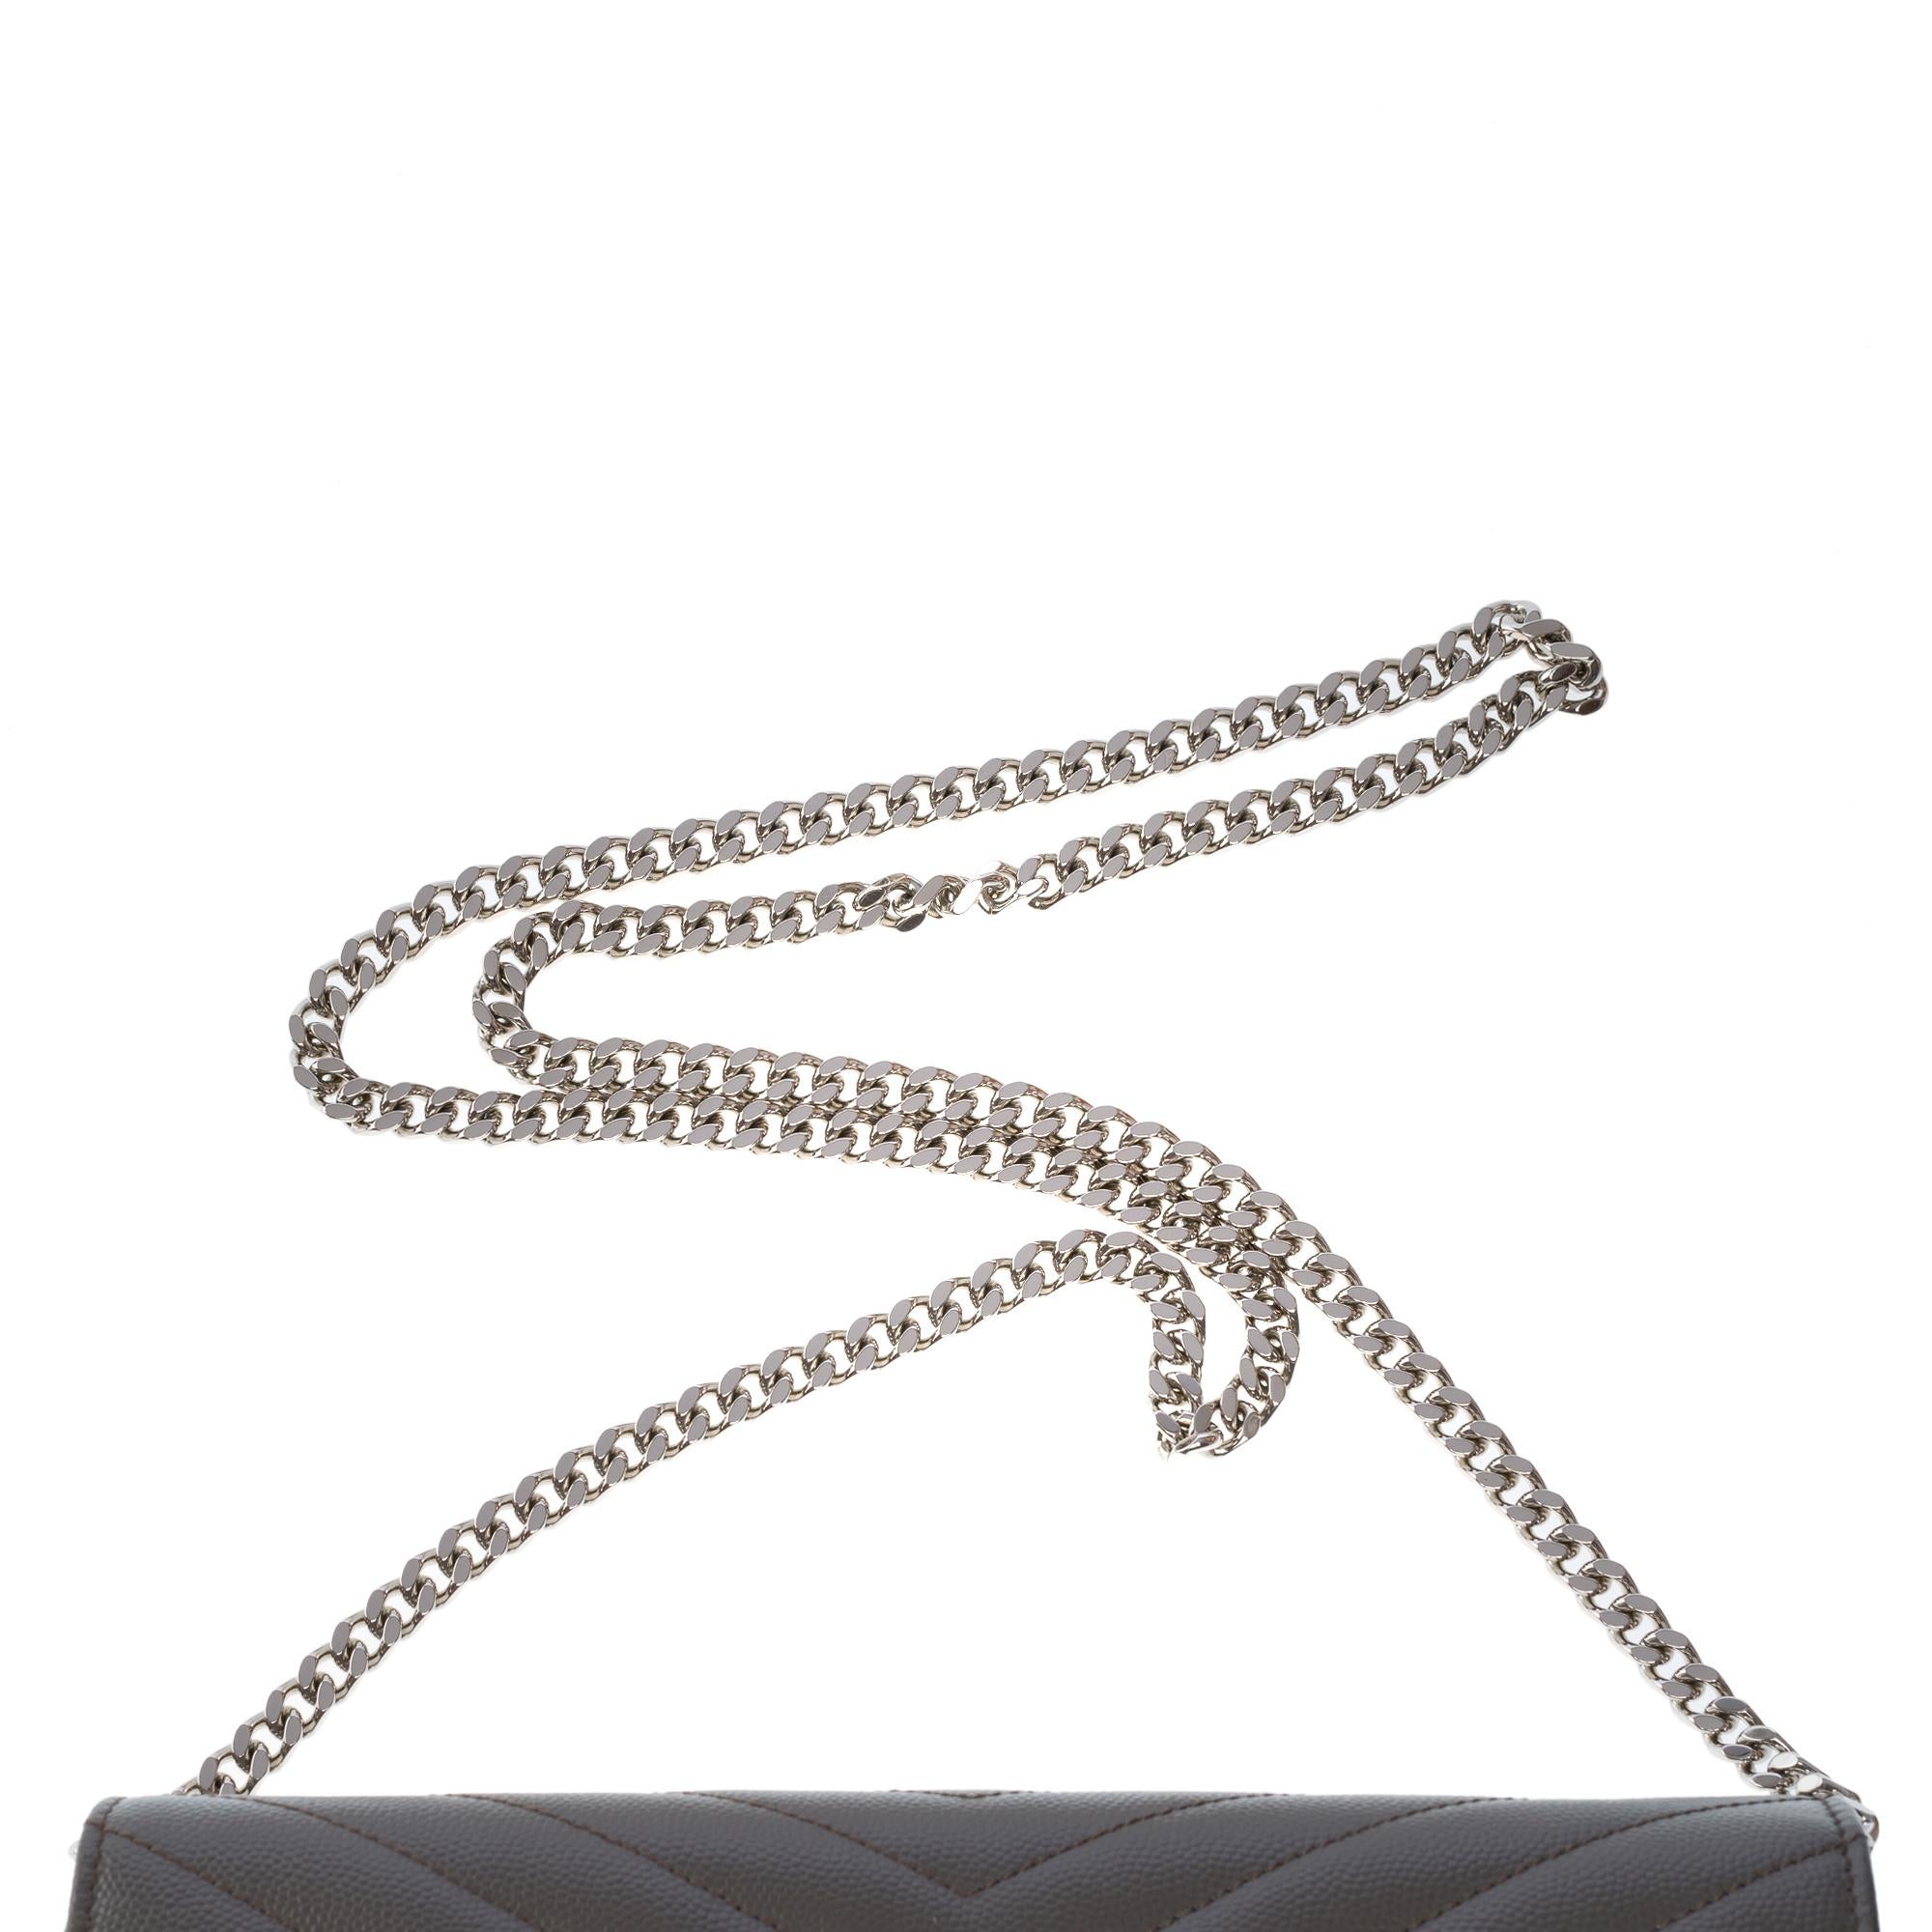 New YSL Pochette Cassandre classic shoulder bag in Grey leather, SHW For Sale 5